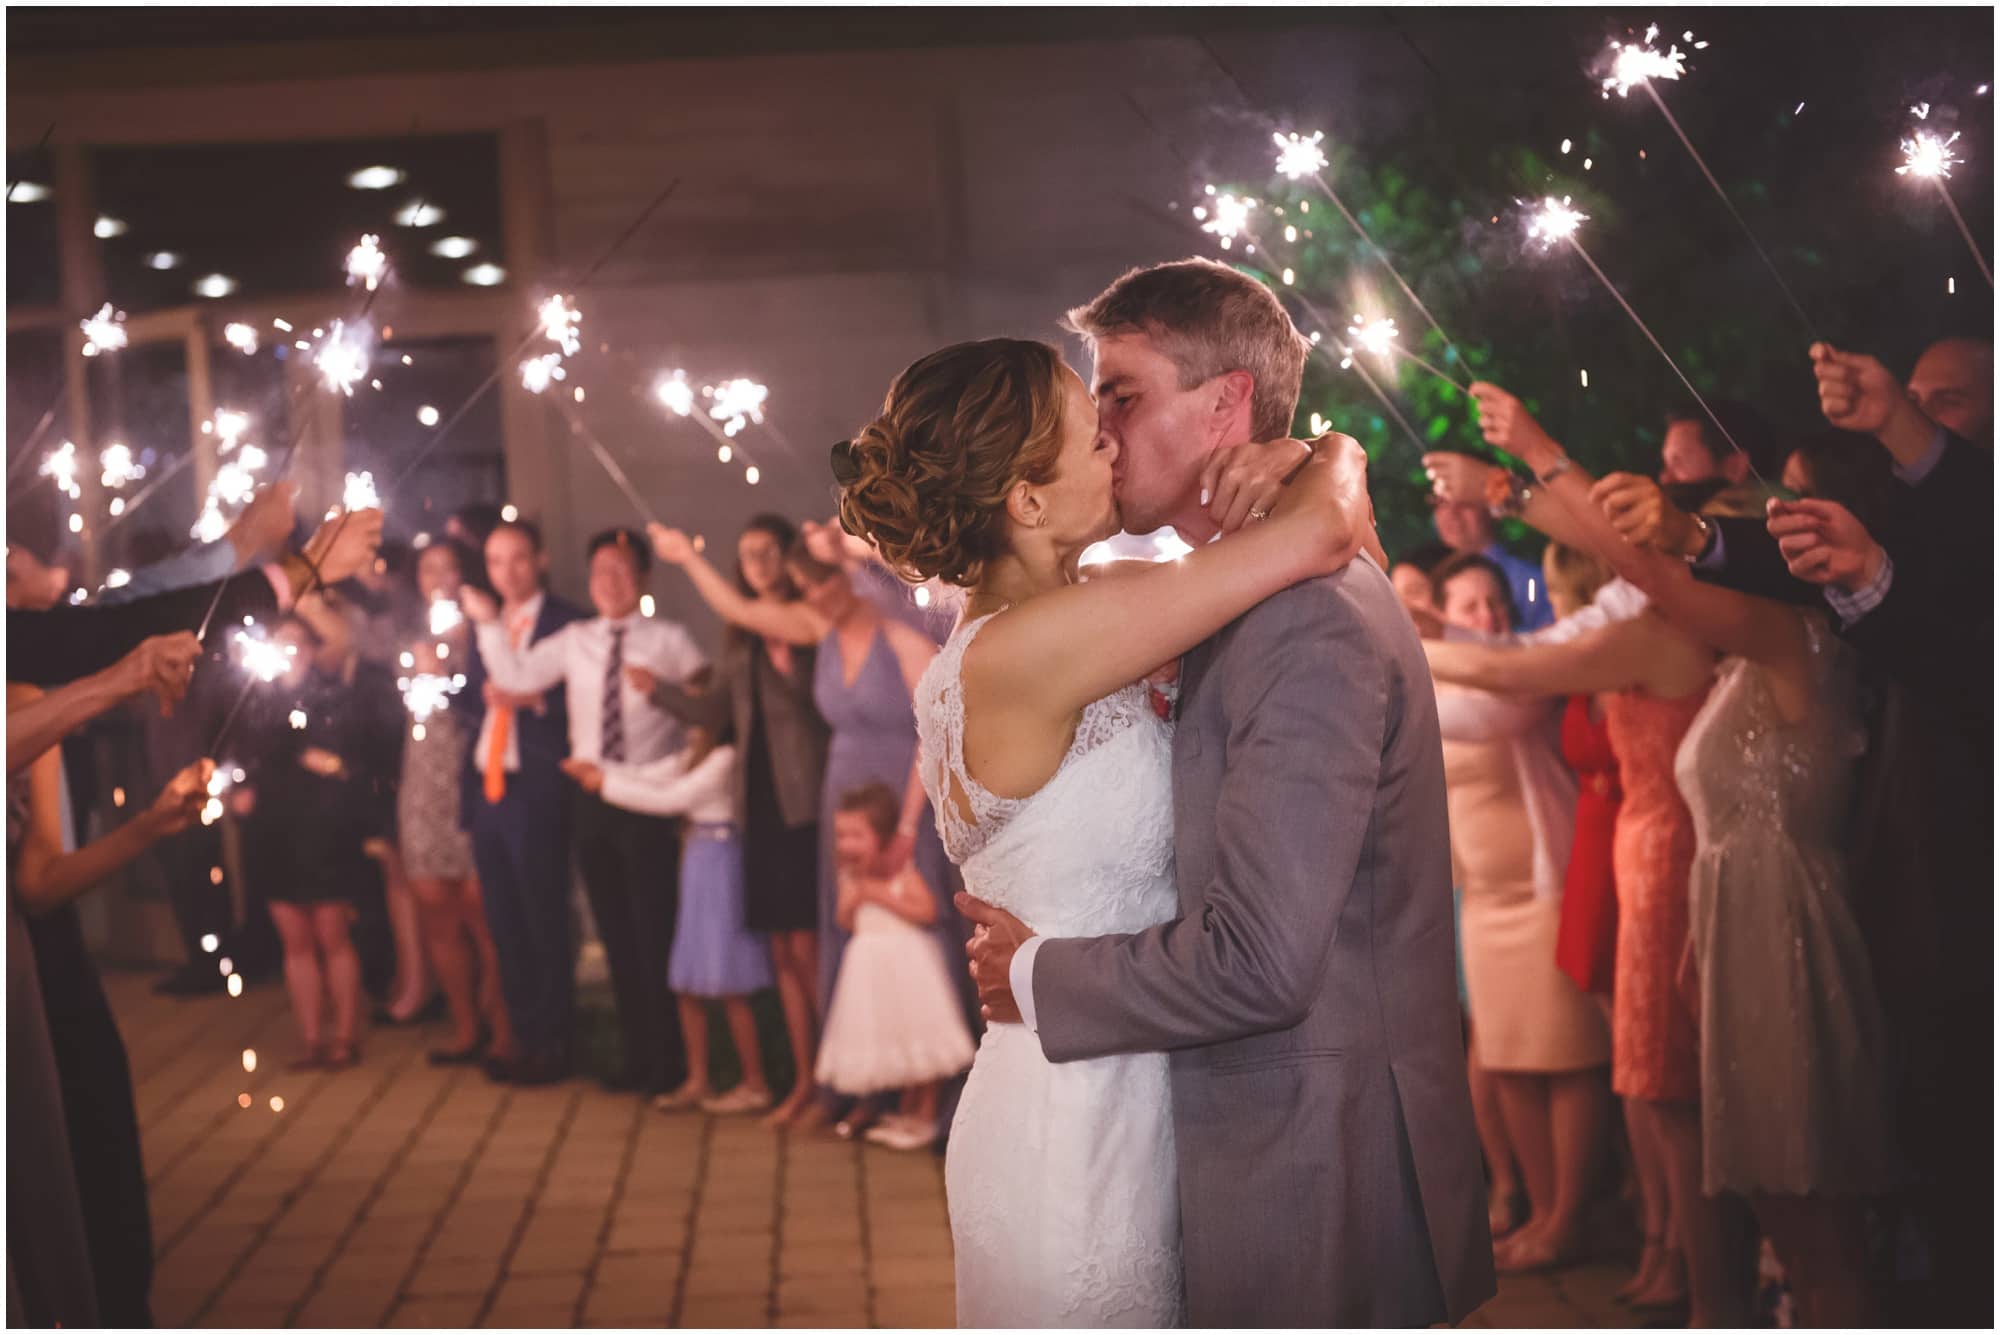 Hyatt McDonalds Lodge Oak Brook Wedding Photographer captures a Sparkler exit at wedding with couple kissing